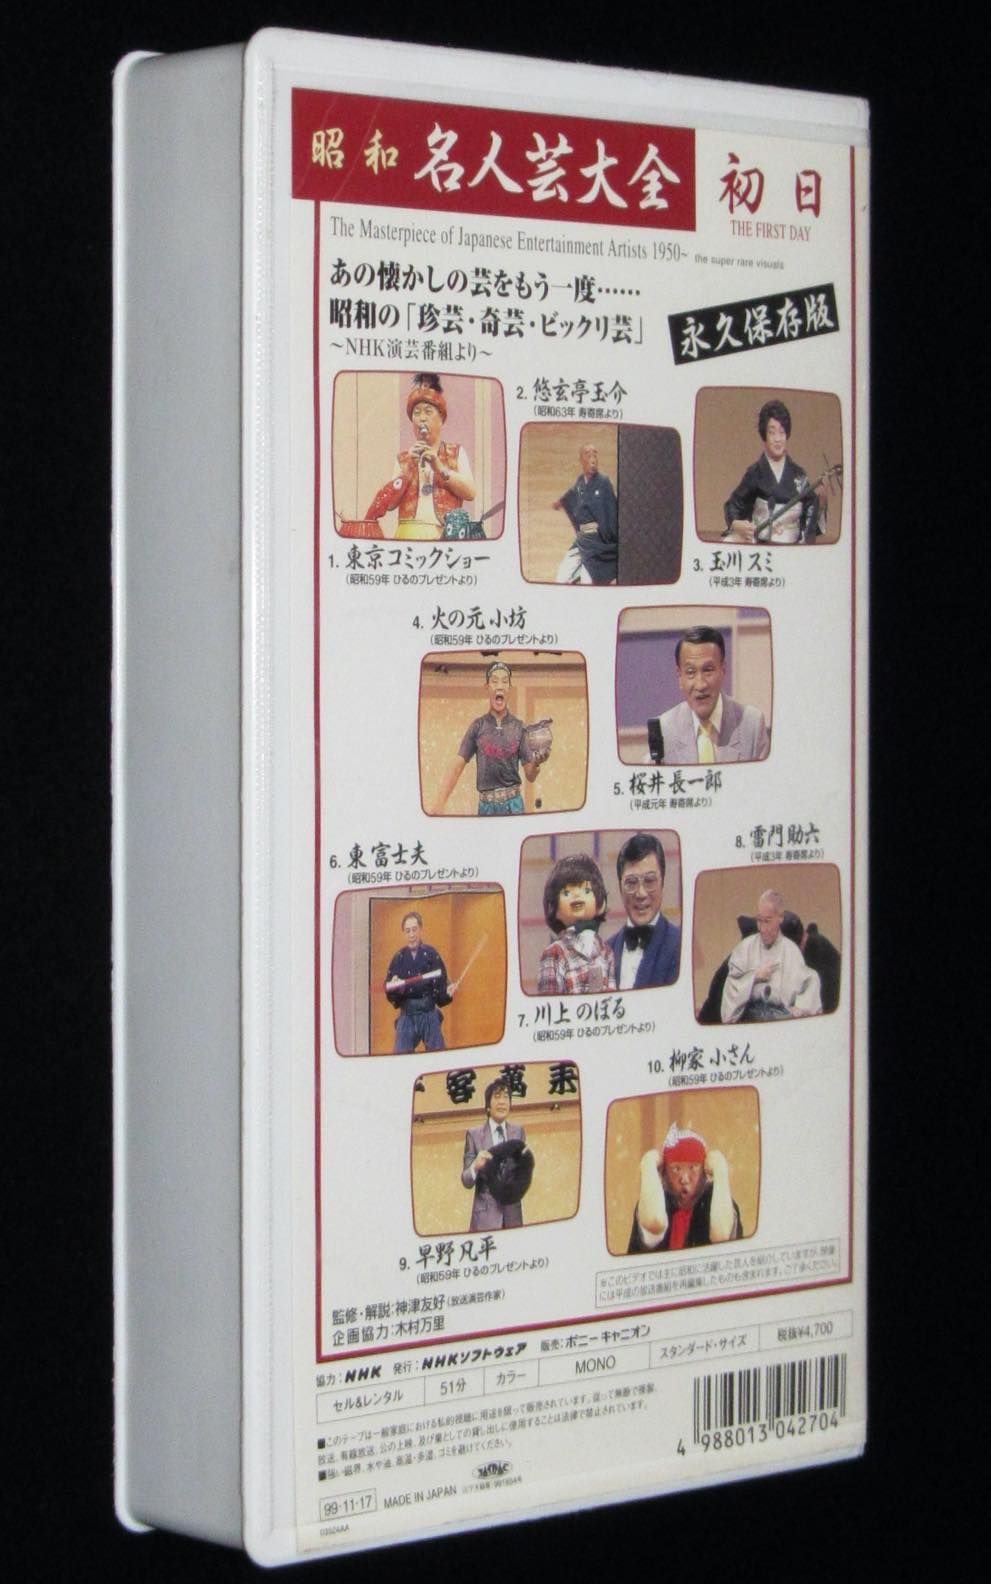 VHS 昭和名人芸大全 6巻セット - ブルーレイ